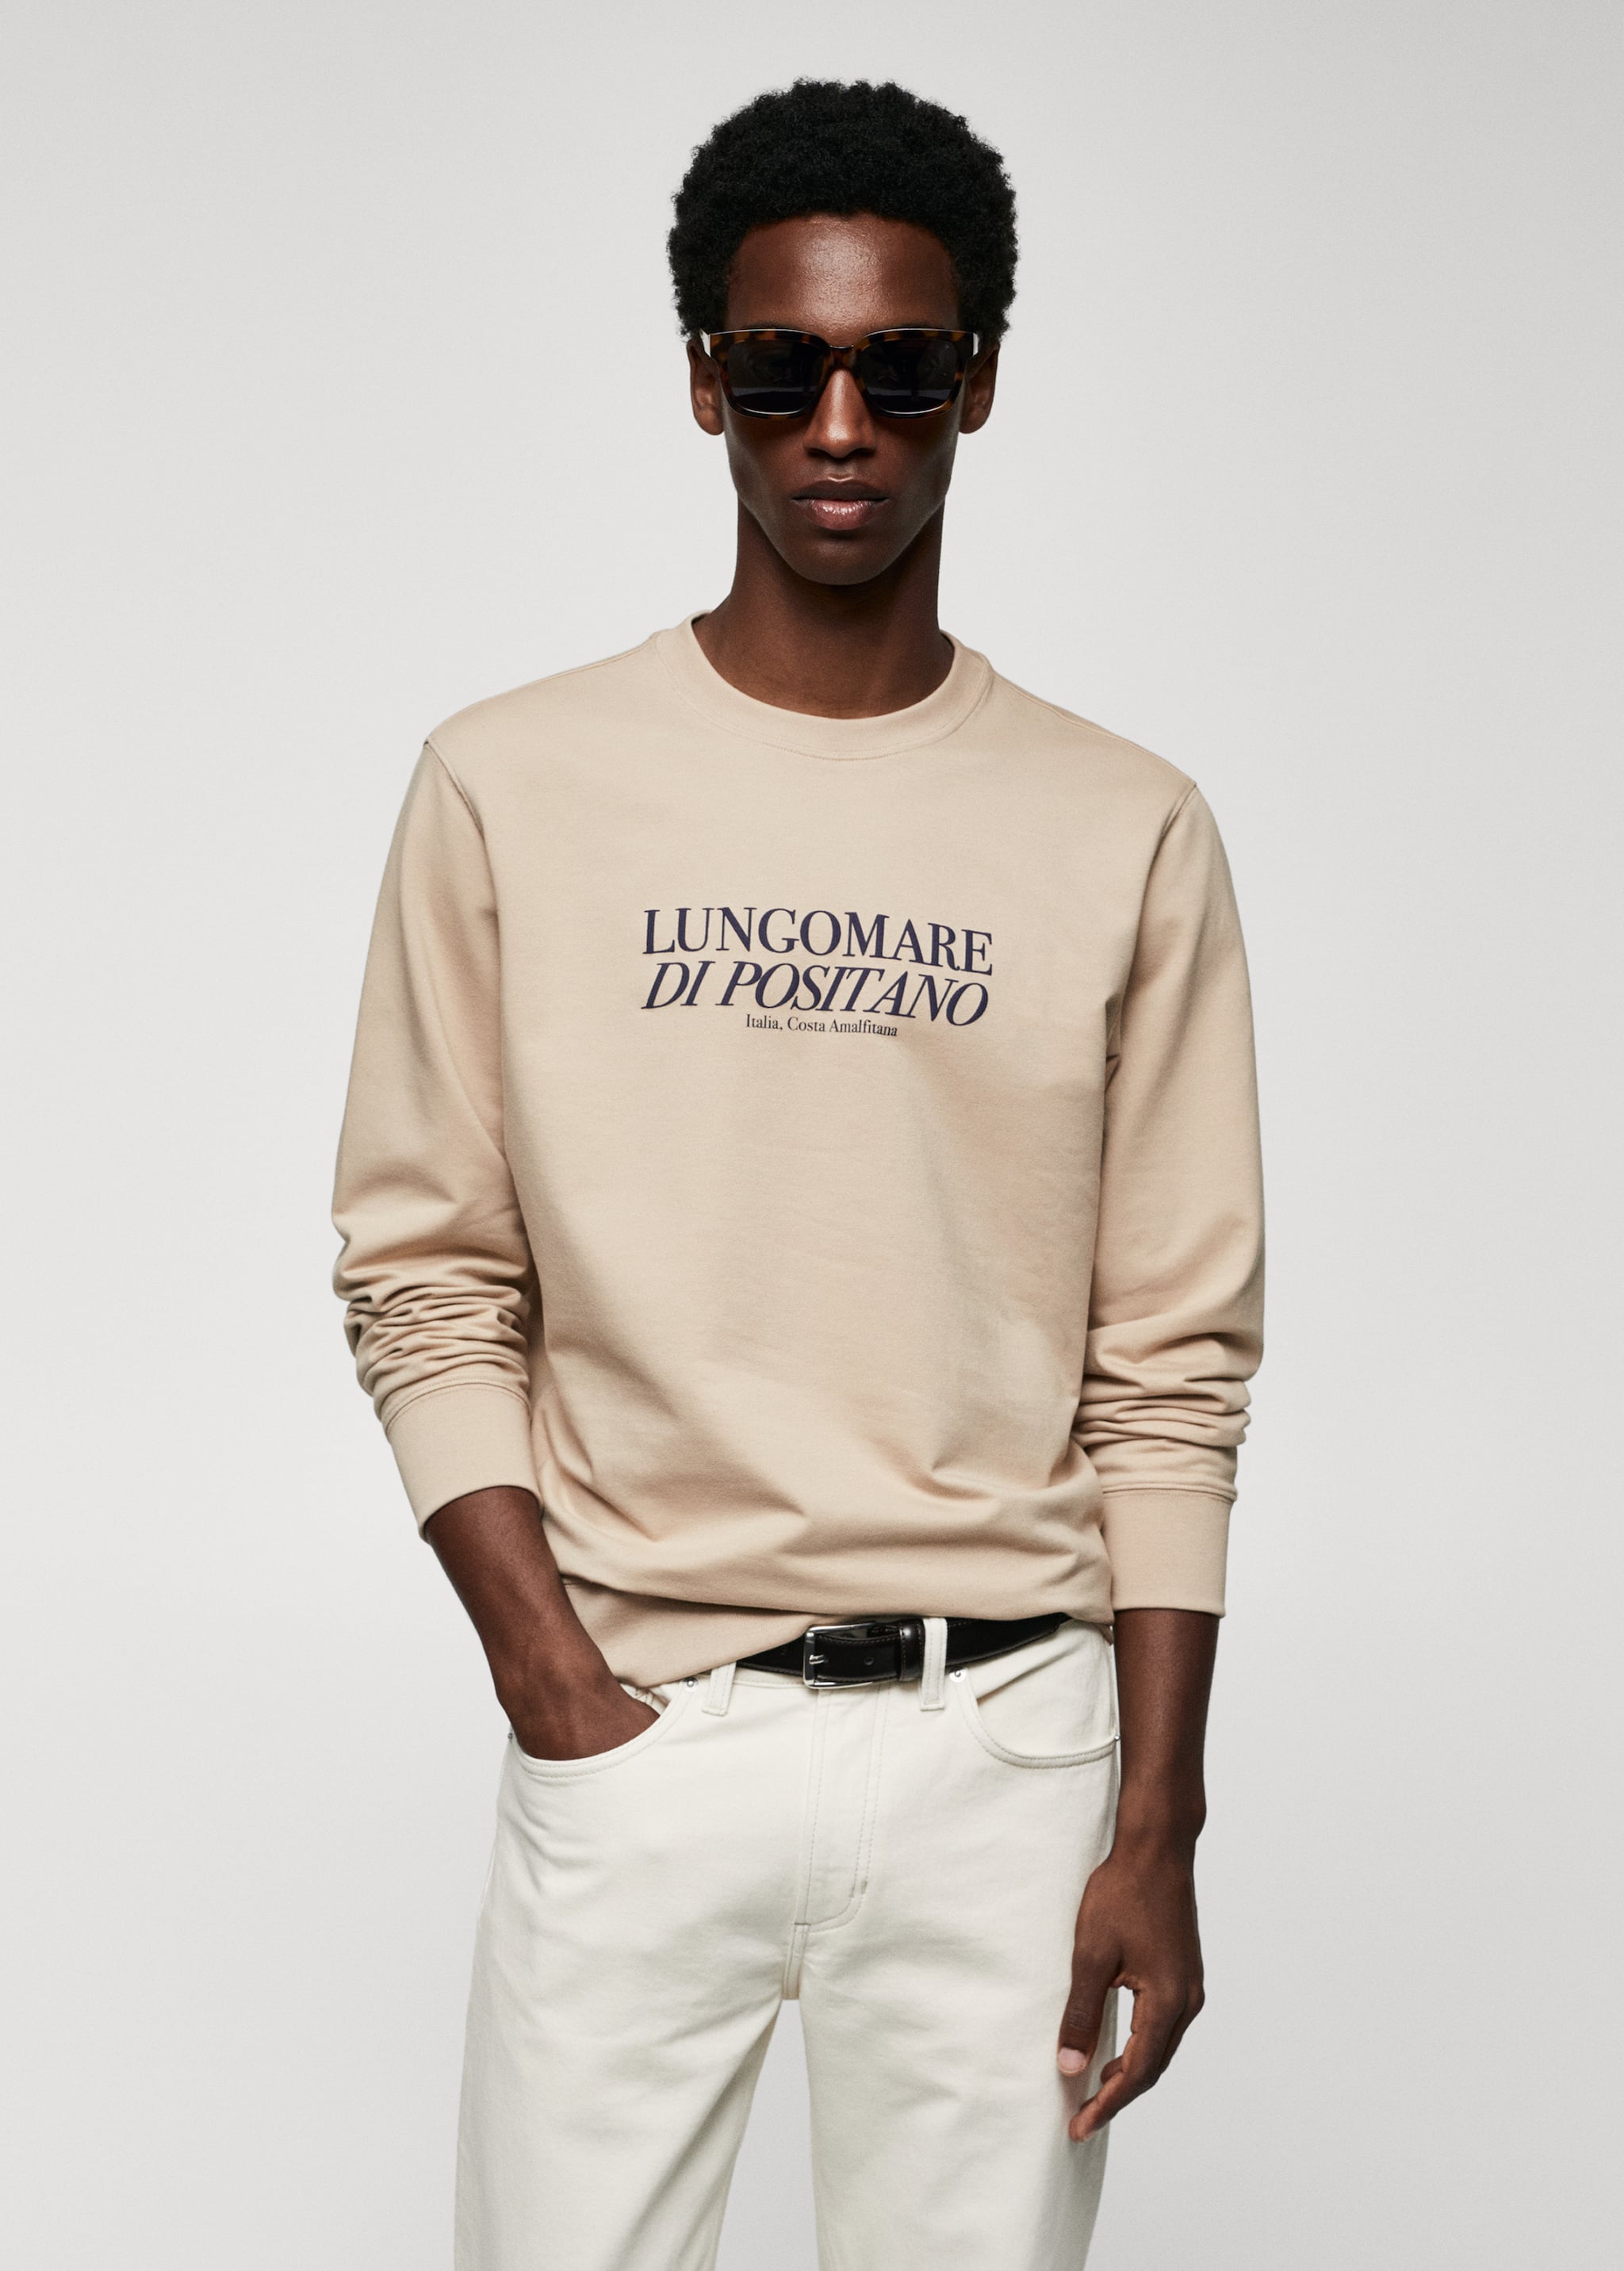 Cotton sweatshirt with printed message - Medium plane